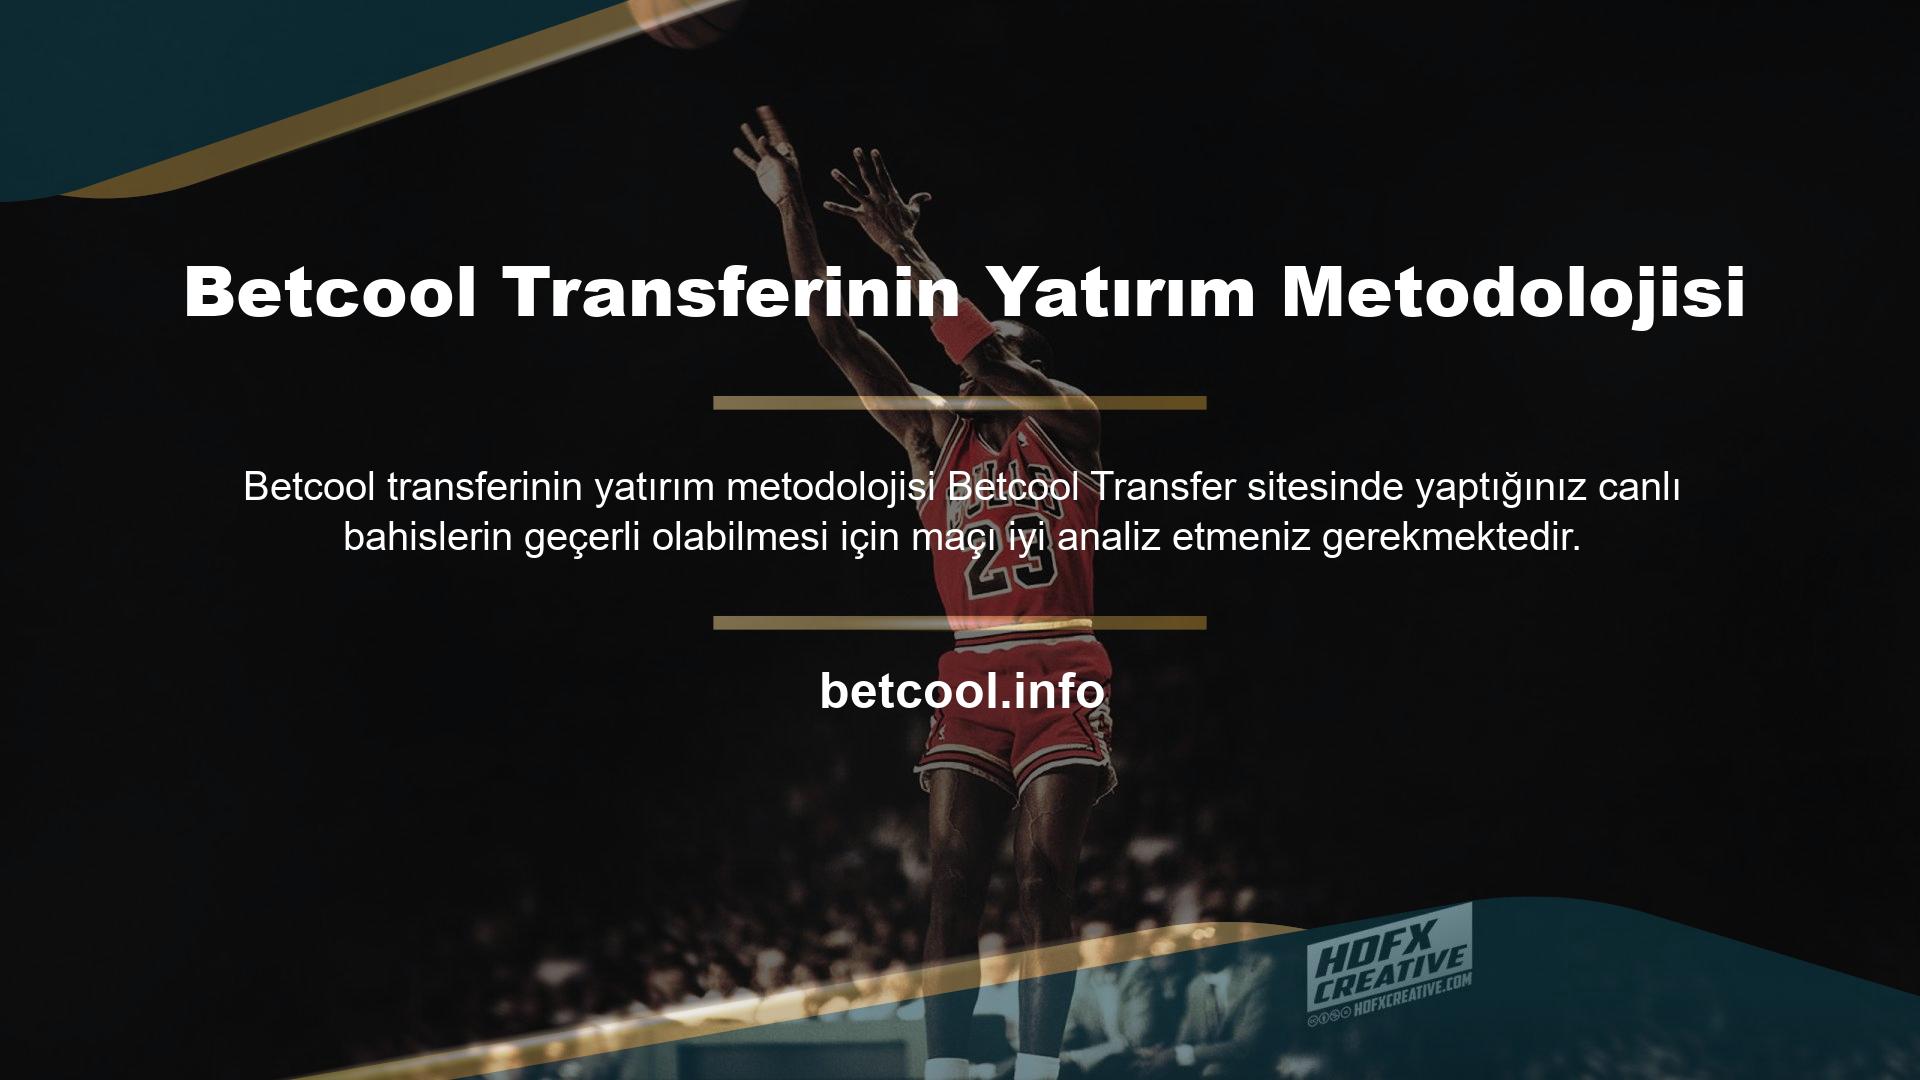 Betcool Transferinin Yatırım Metodolojisi